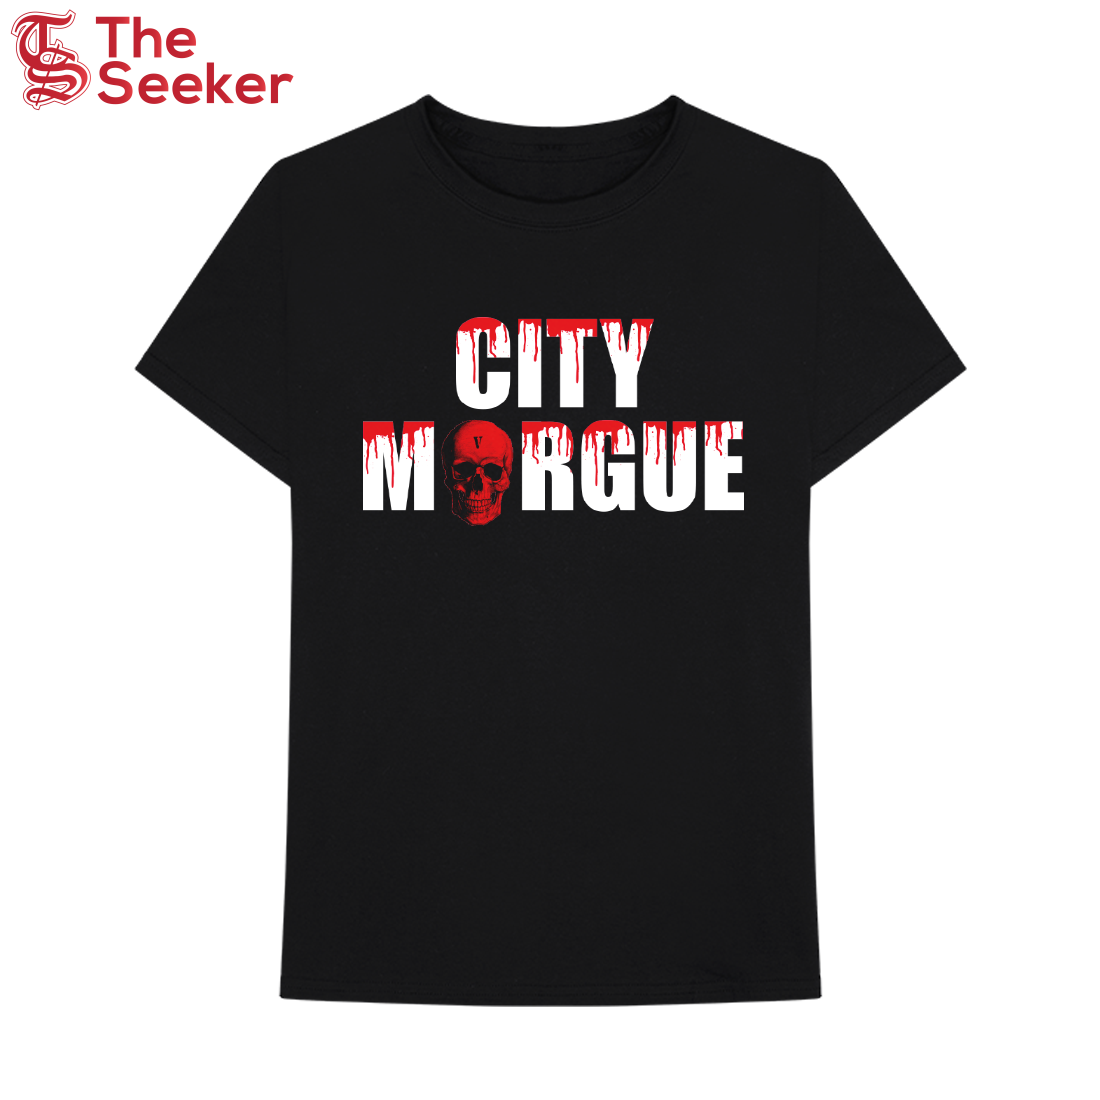 City Morgue x Vlone Dogs Tee Black